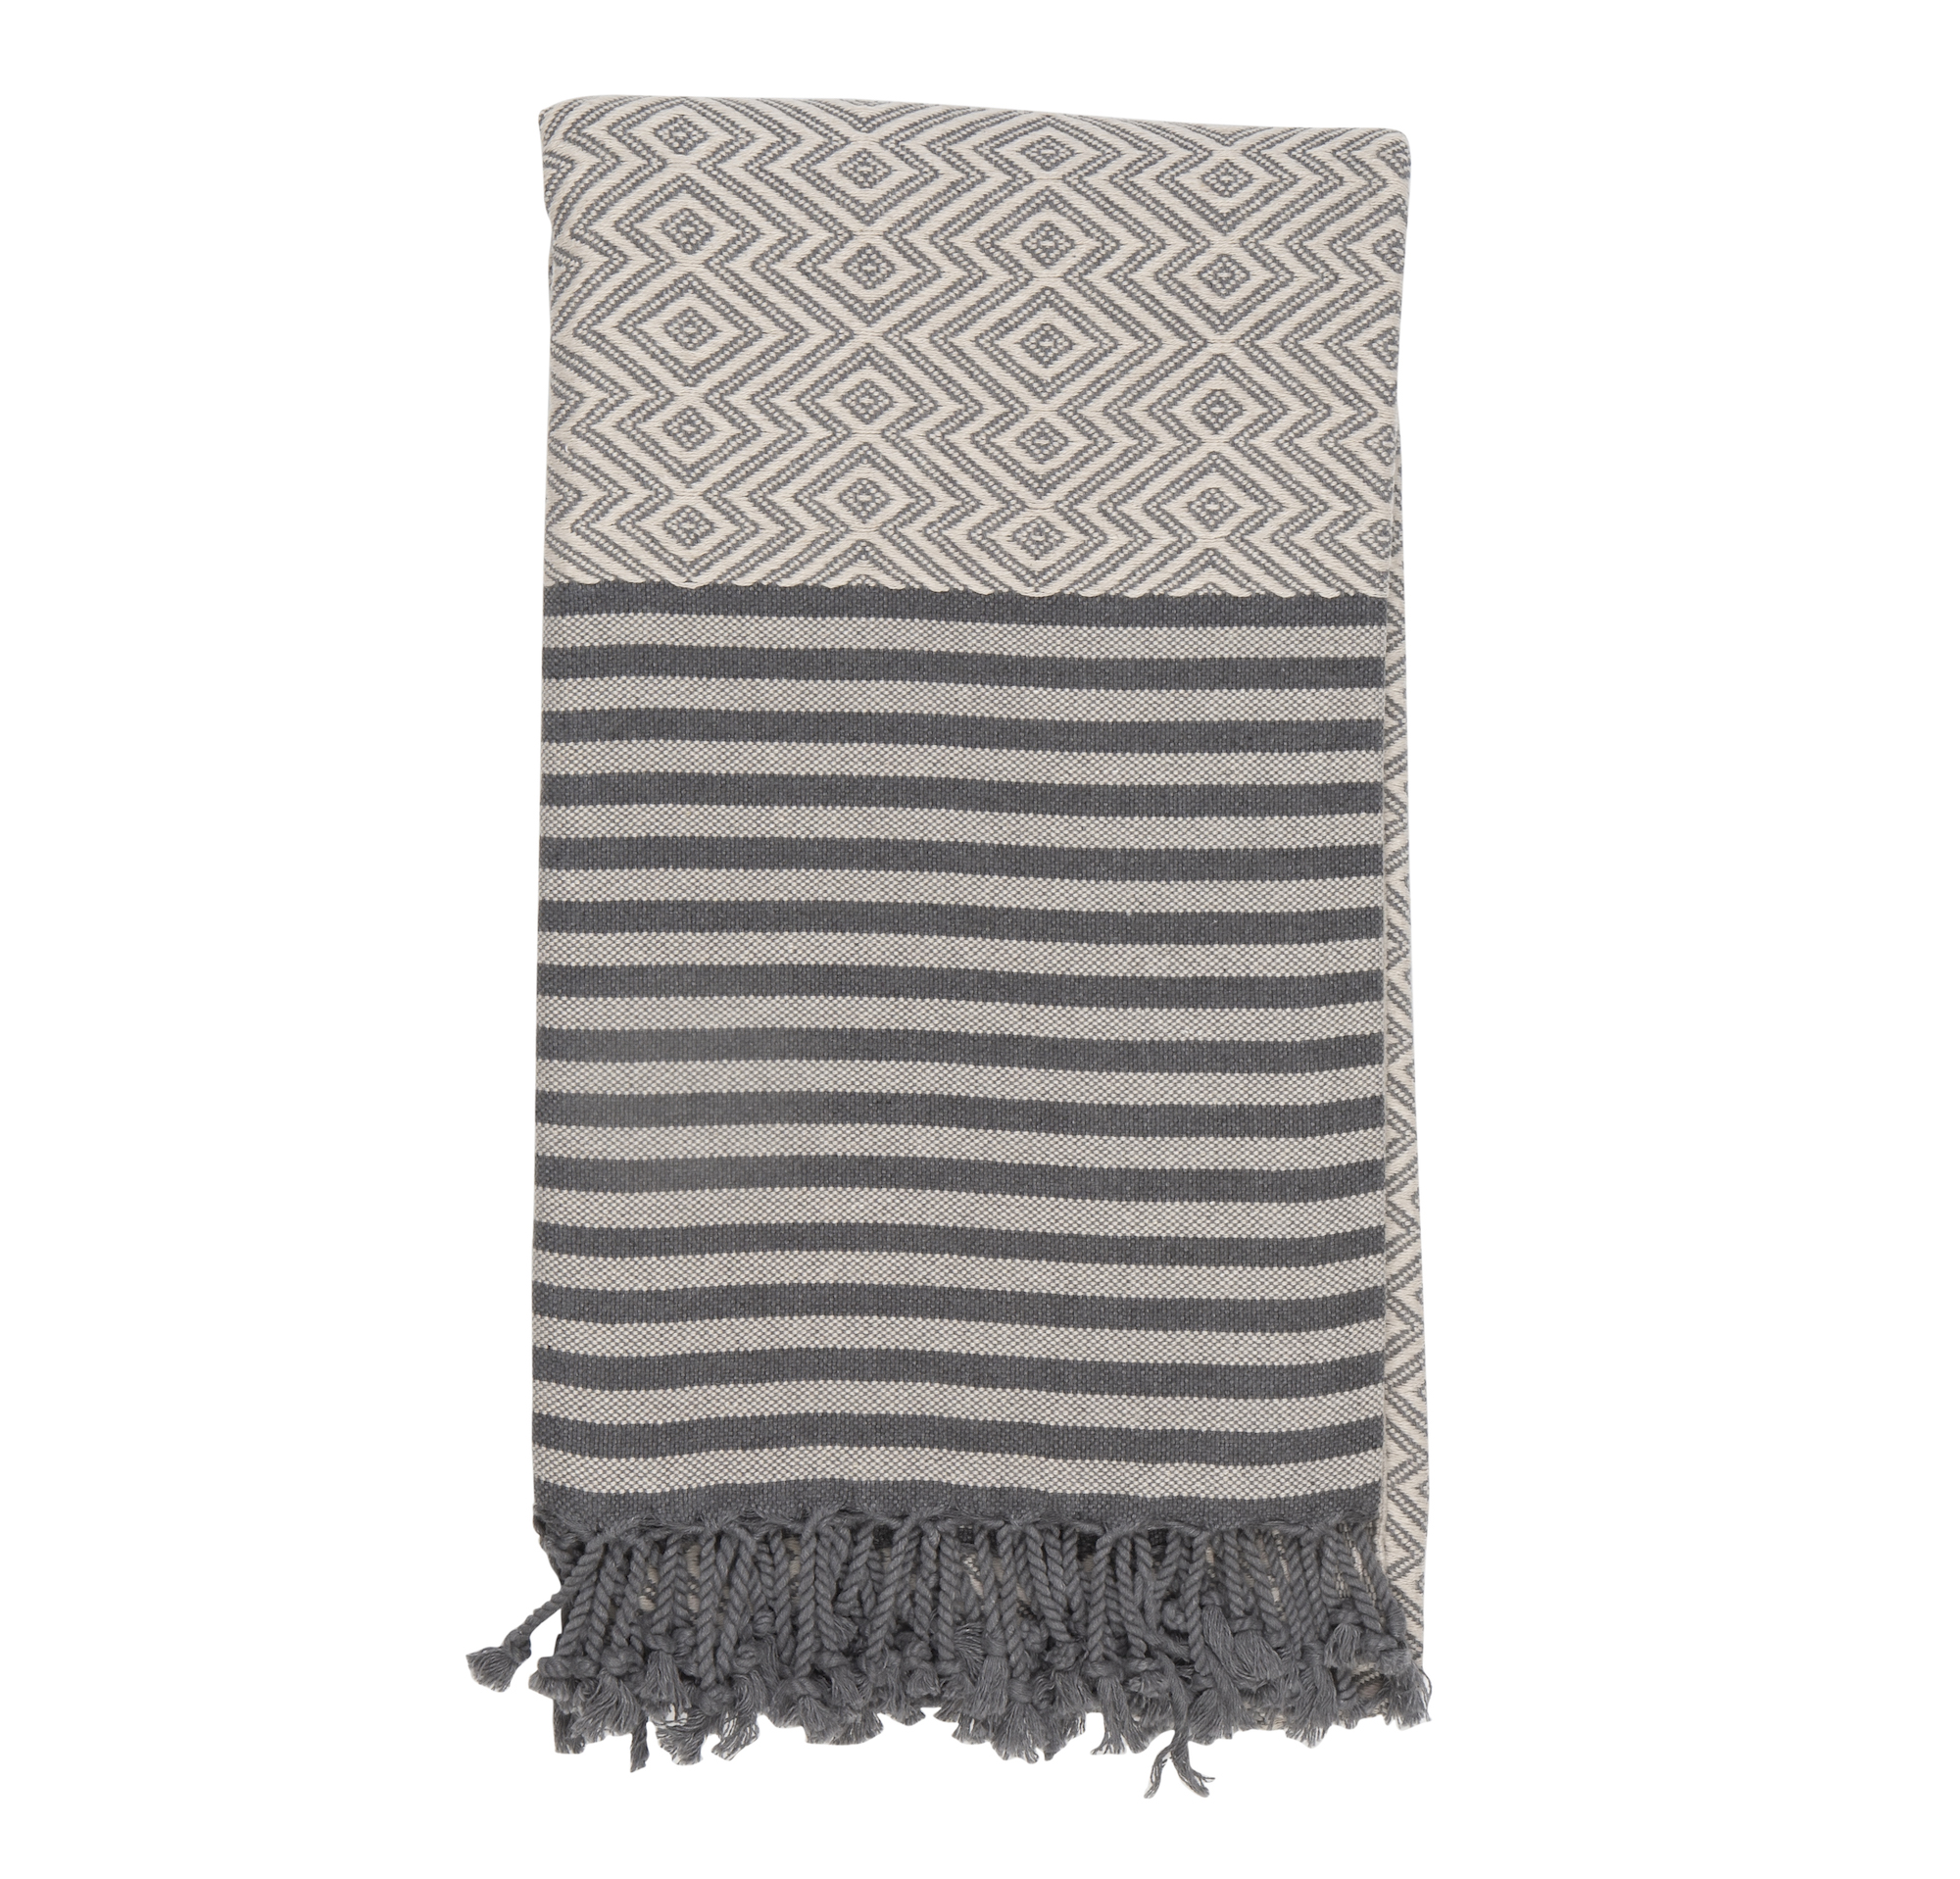 Hammam Towel in Taupe & Grey 